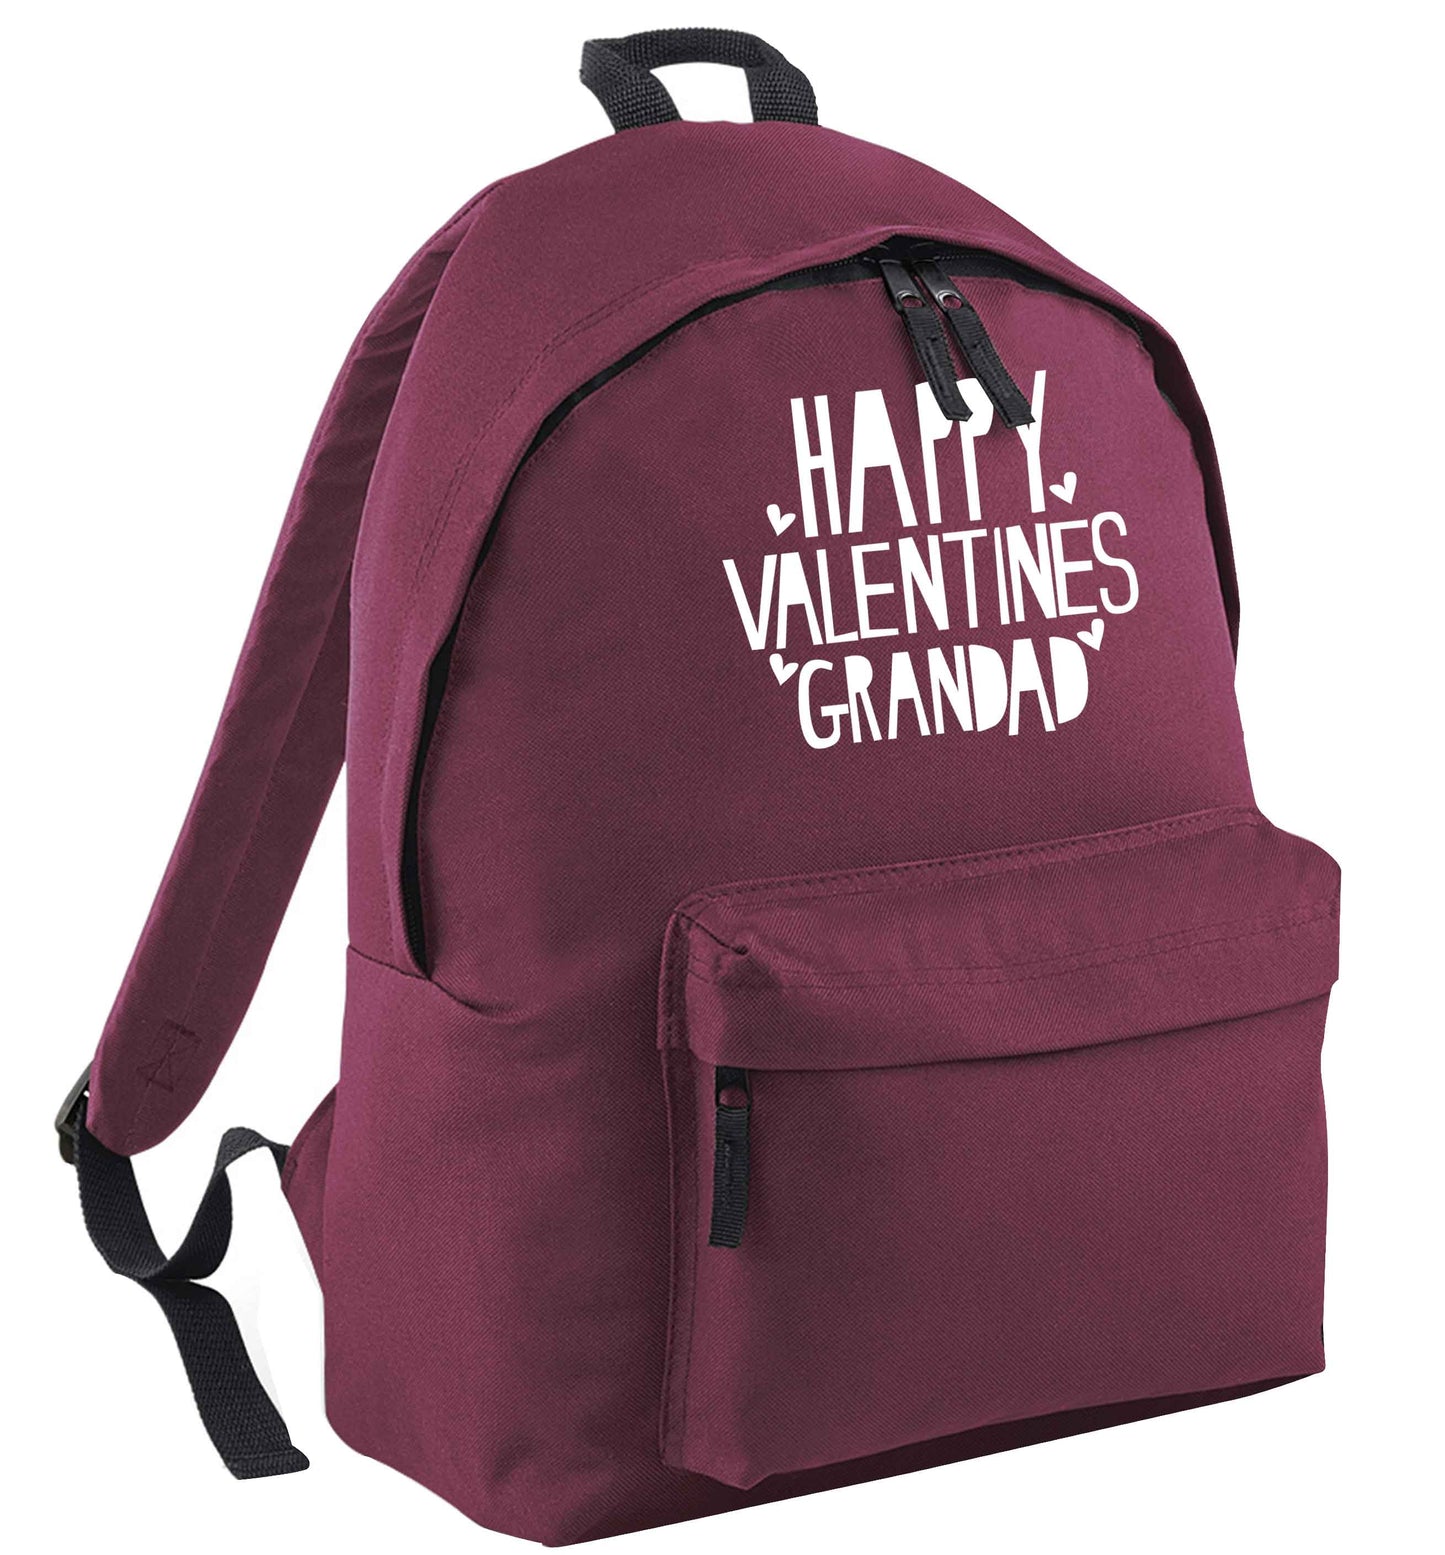 Happy valentines grandad black childrens backpack